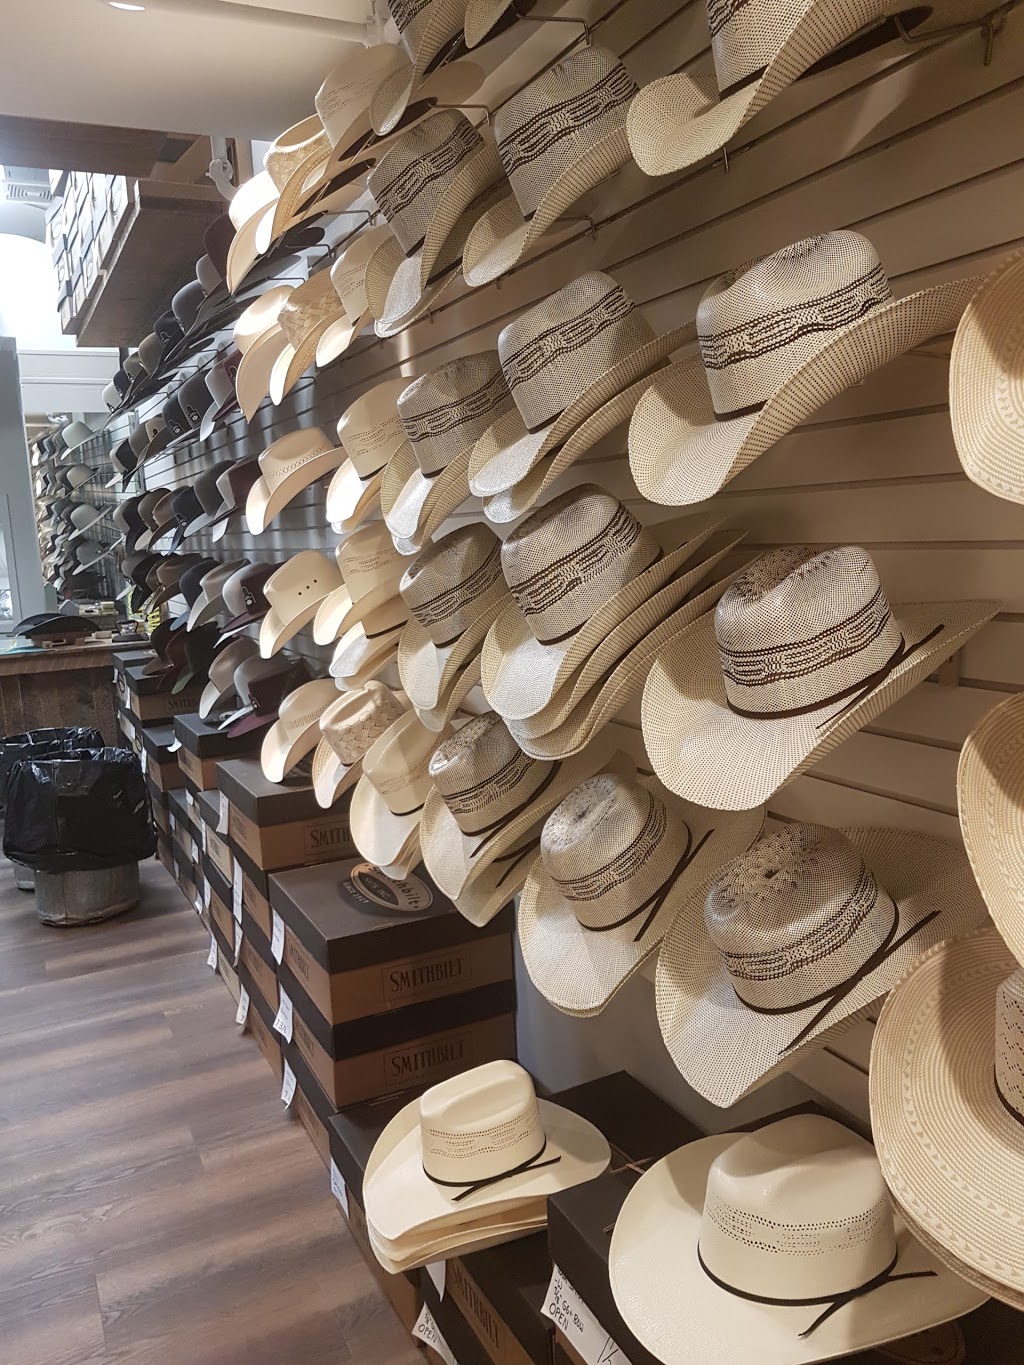 Smithbilt Hats Inc | clothing store | 1015 11 St SE, Calgary, AB T2G 3E9, Canada | 4032449131 OR +1 403-244-9131